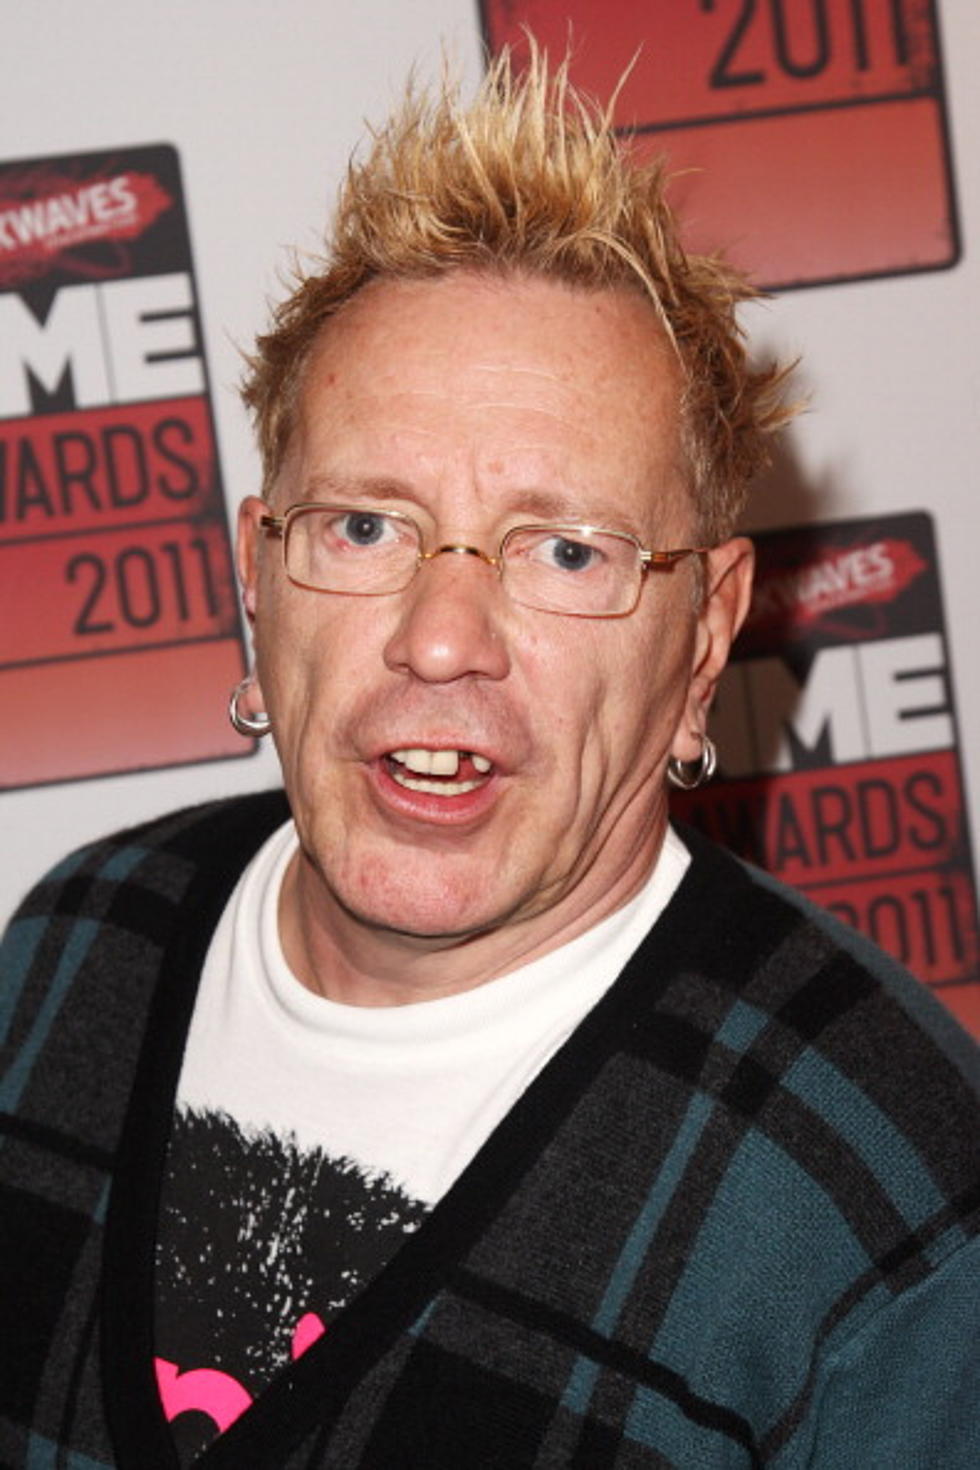 Sex Pistol John Lydon Blasts Ozzy Osbourne for Promoting Drug Abuse